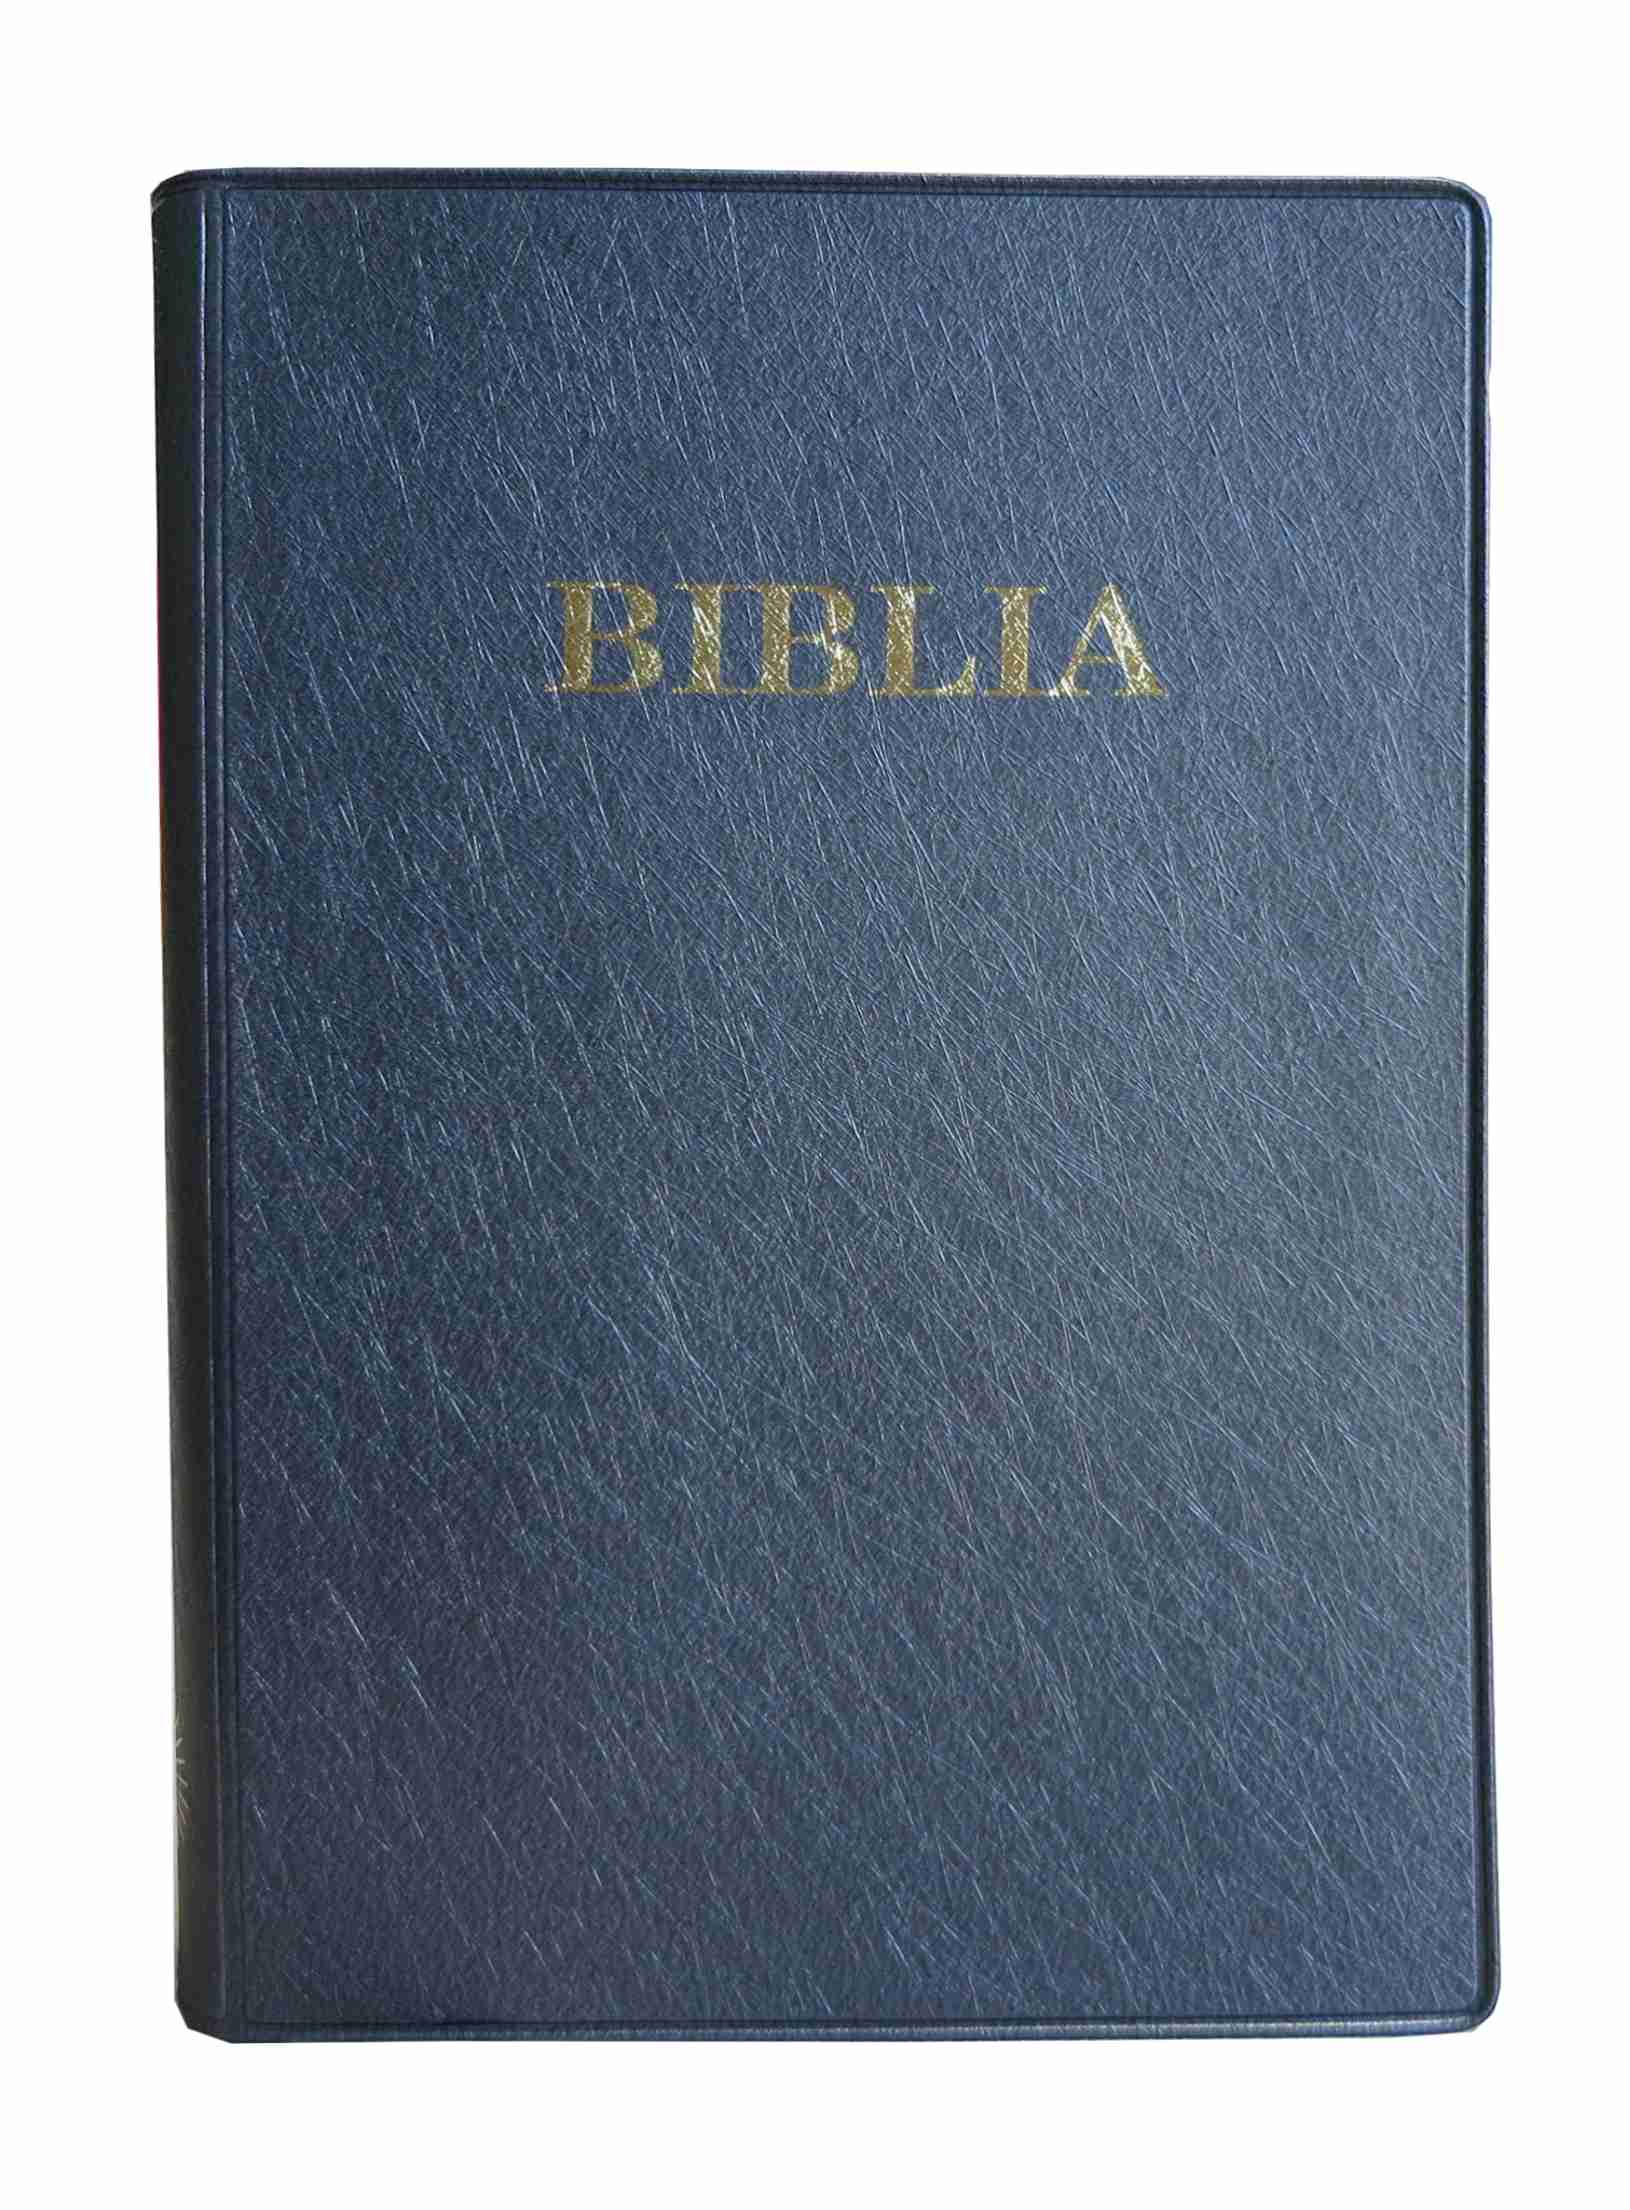 Biblia sau Sfanta Scriptura (Romanian)